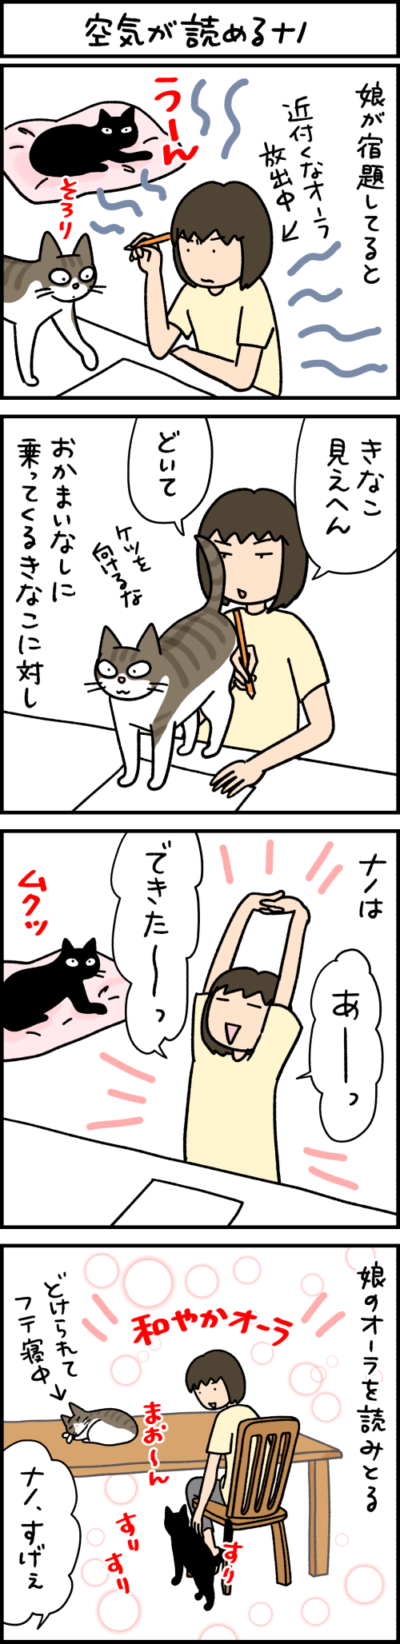 猫漫画